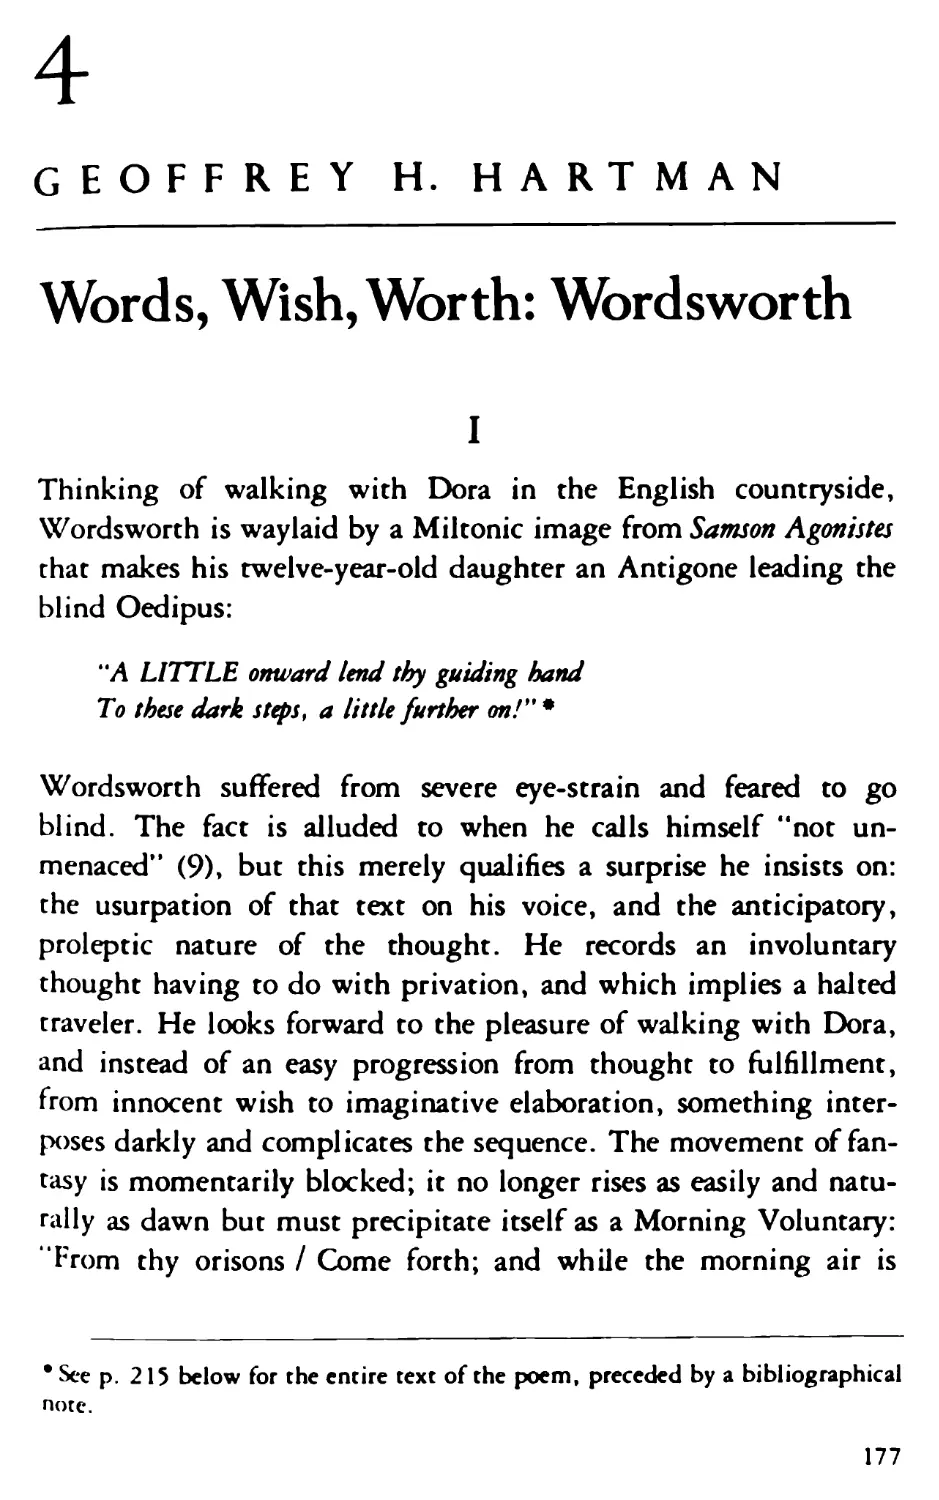 4. Words, Wish, Worth: Wordsworth. Geoffrey H. Hartman